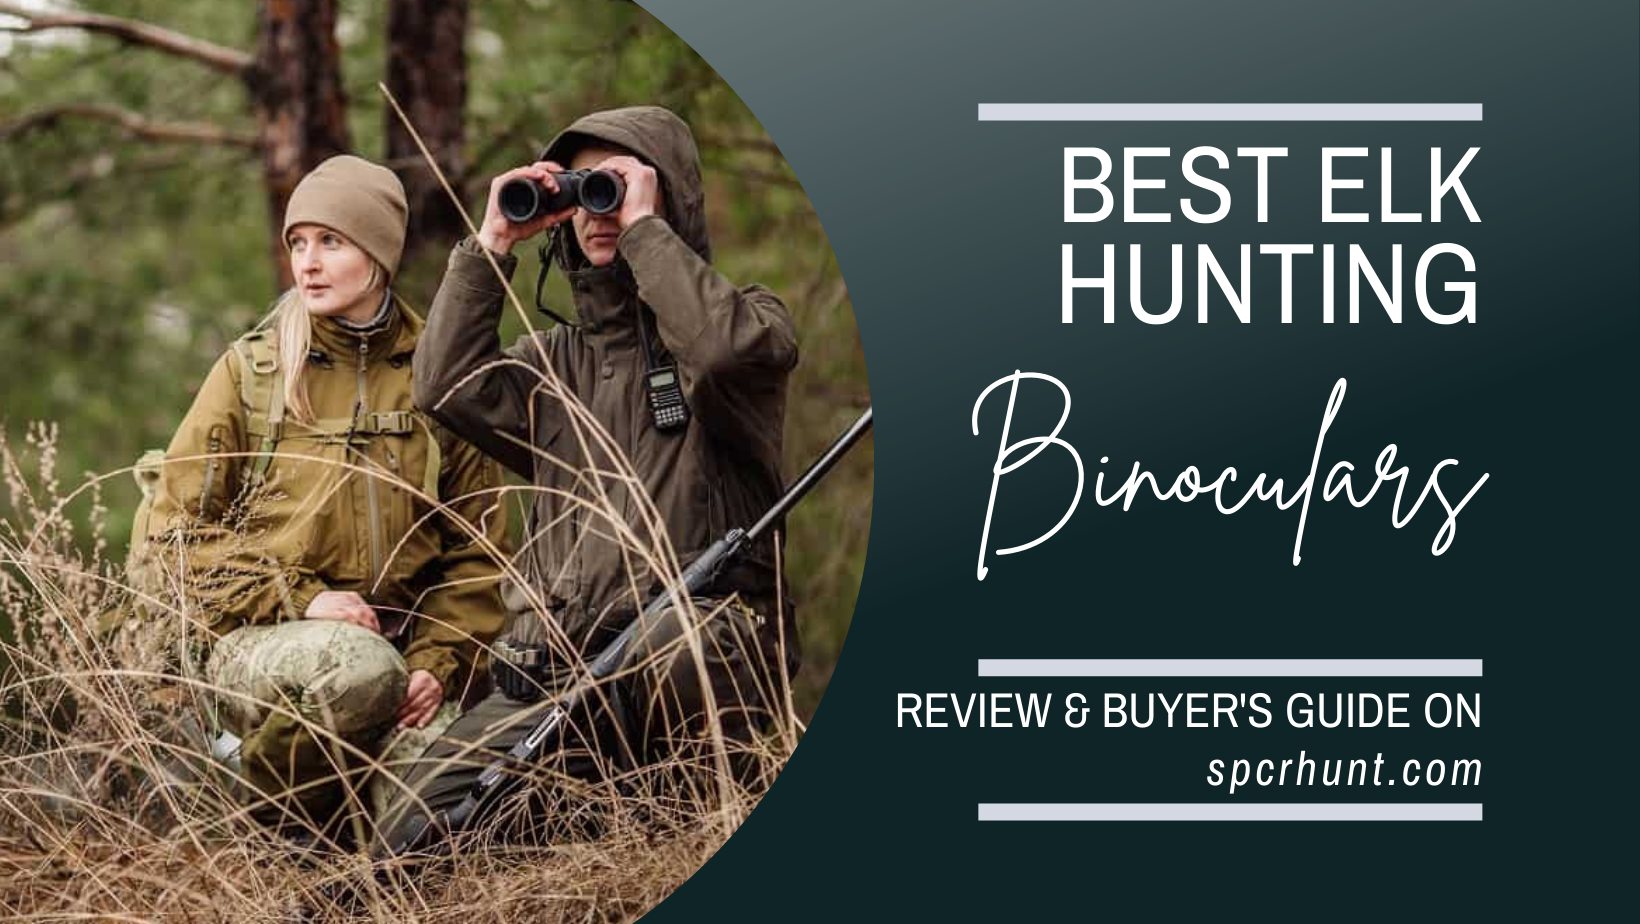 11 Of The Best Elk Hunting Binoculars: Reviews and Buyer’s Guide